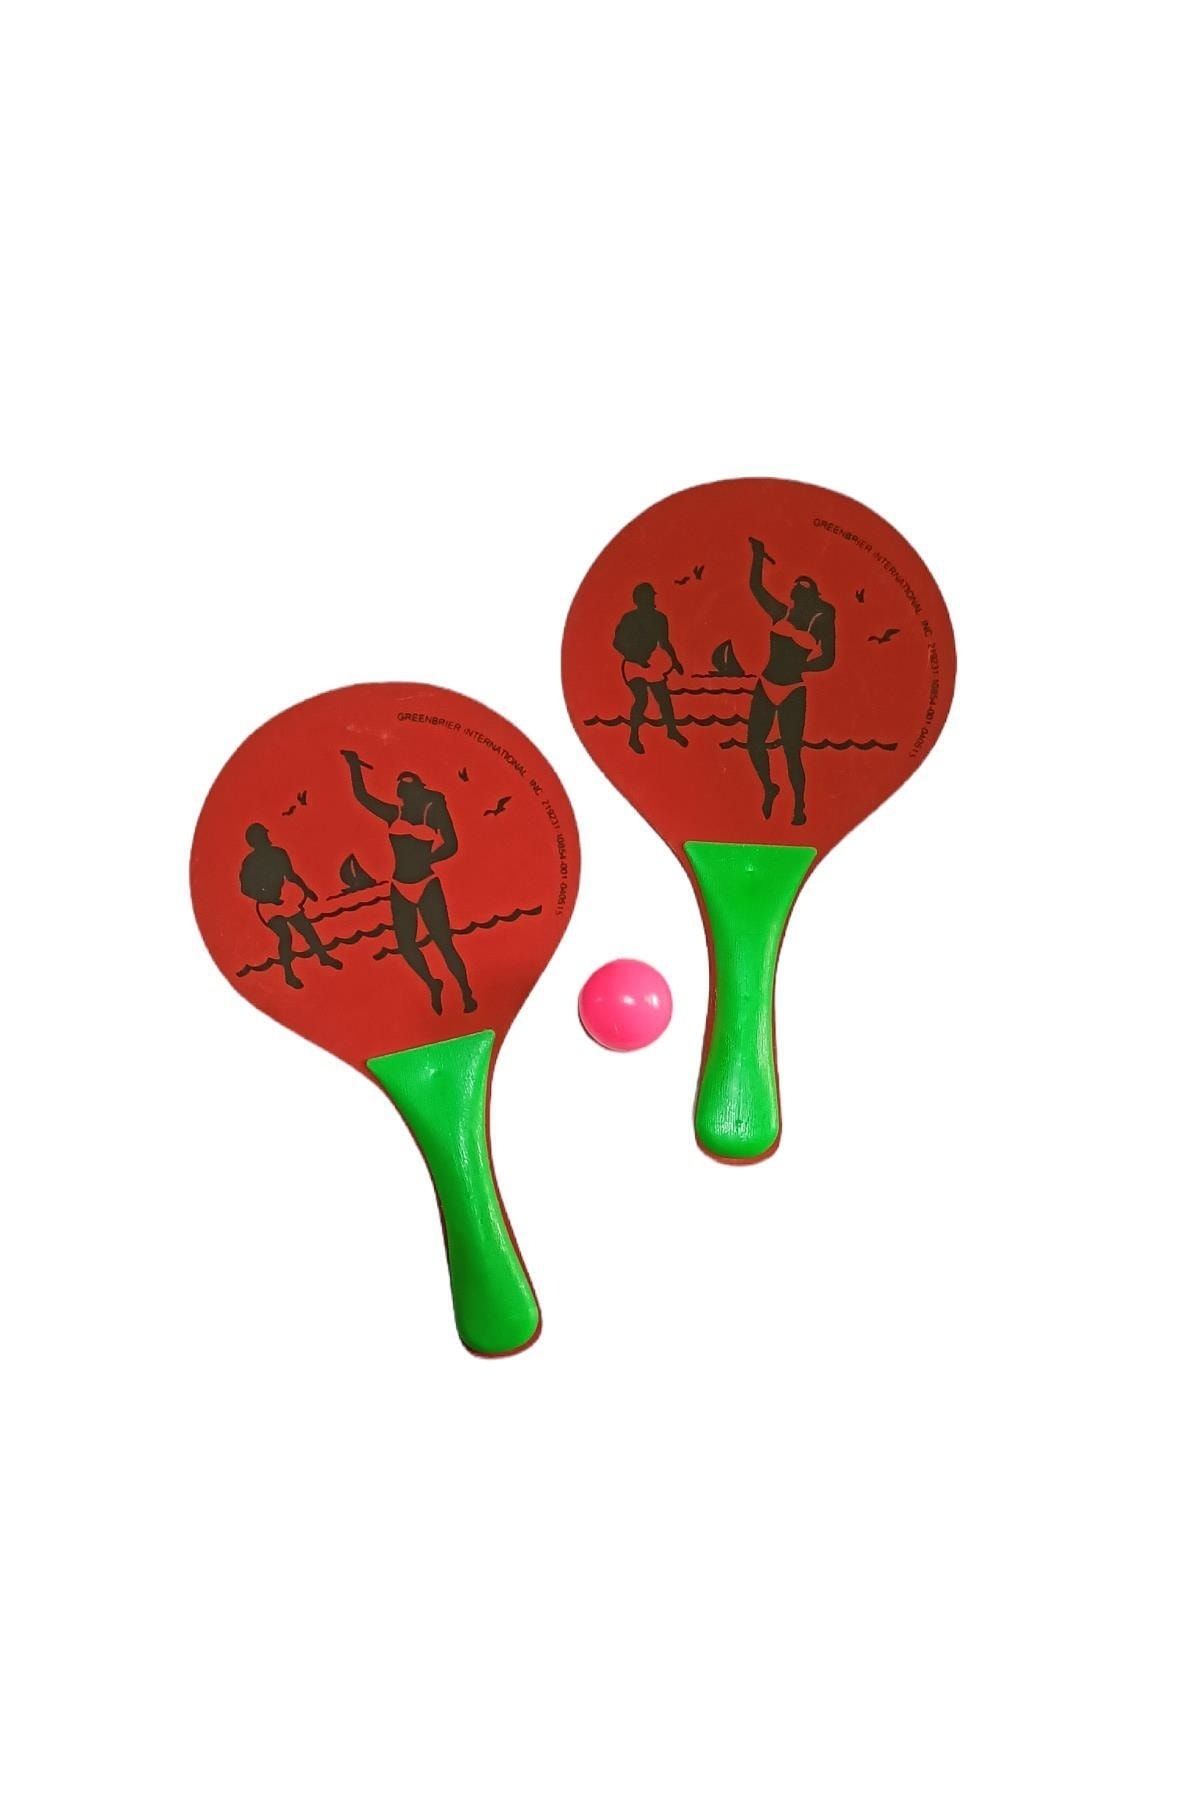 Avessa Plaj Tenis Raket Seti Çocuk Boy (2 Raket 1 Top) Kırmızı-yeşil